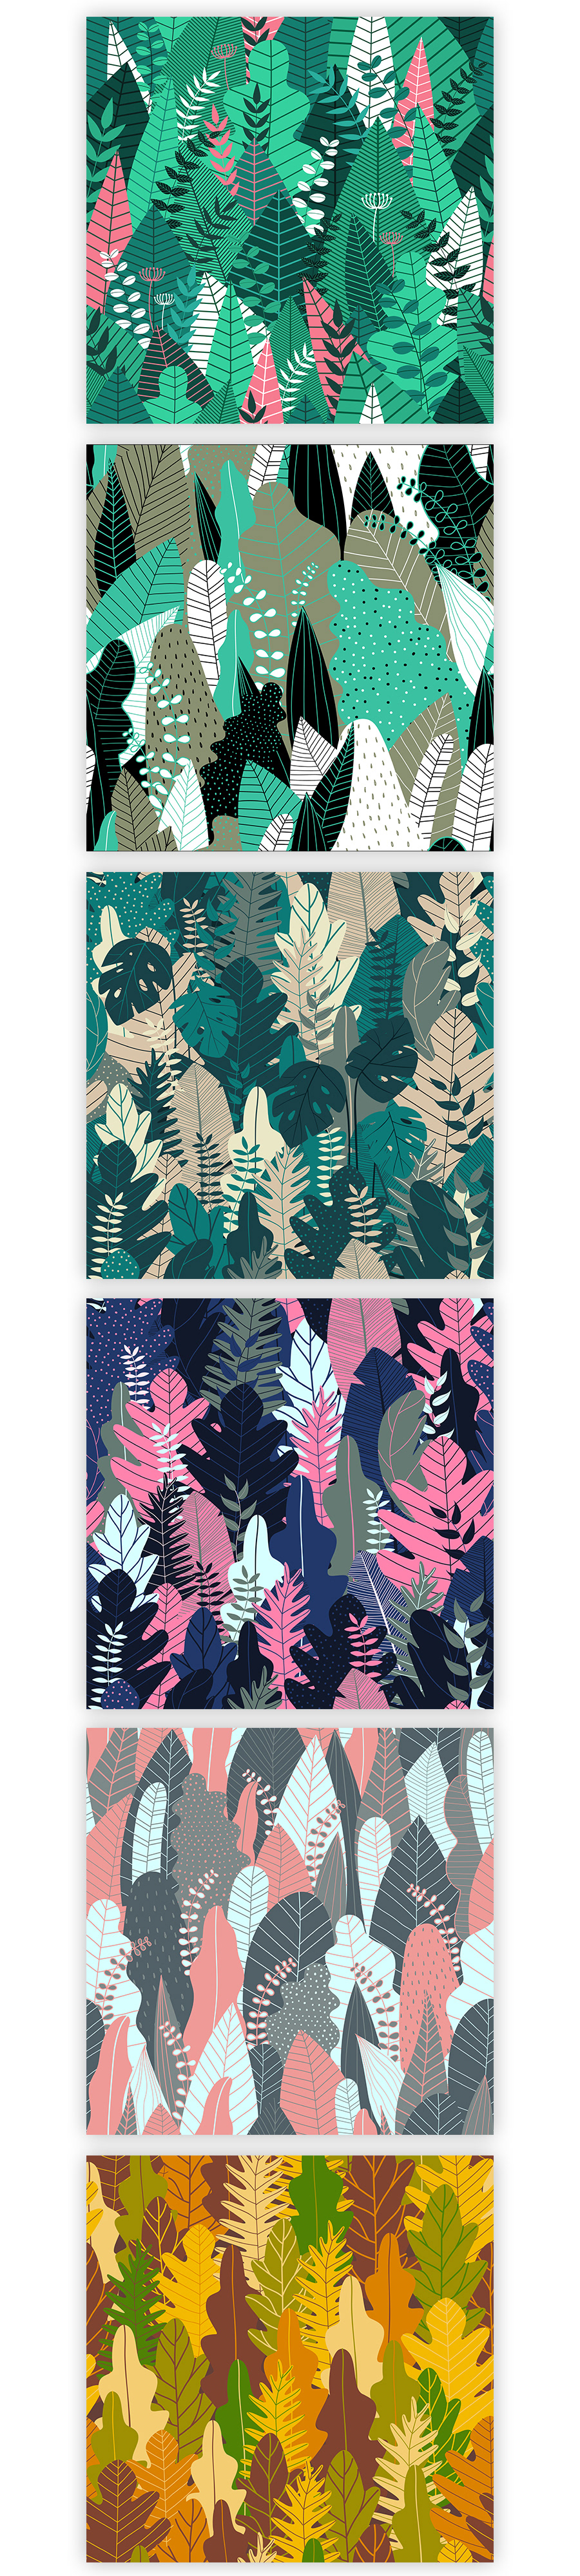 forest pattern seamless jungle background vector ILLUSTRATION  leaves leaf pattern hand drawn